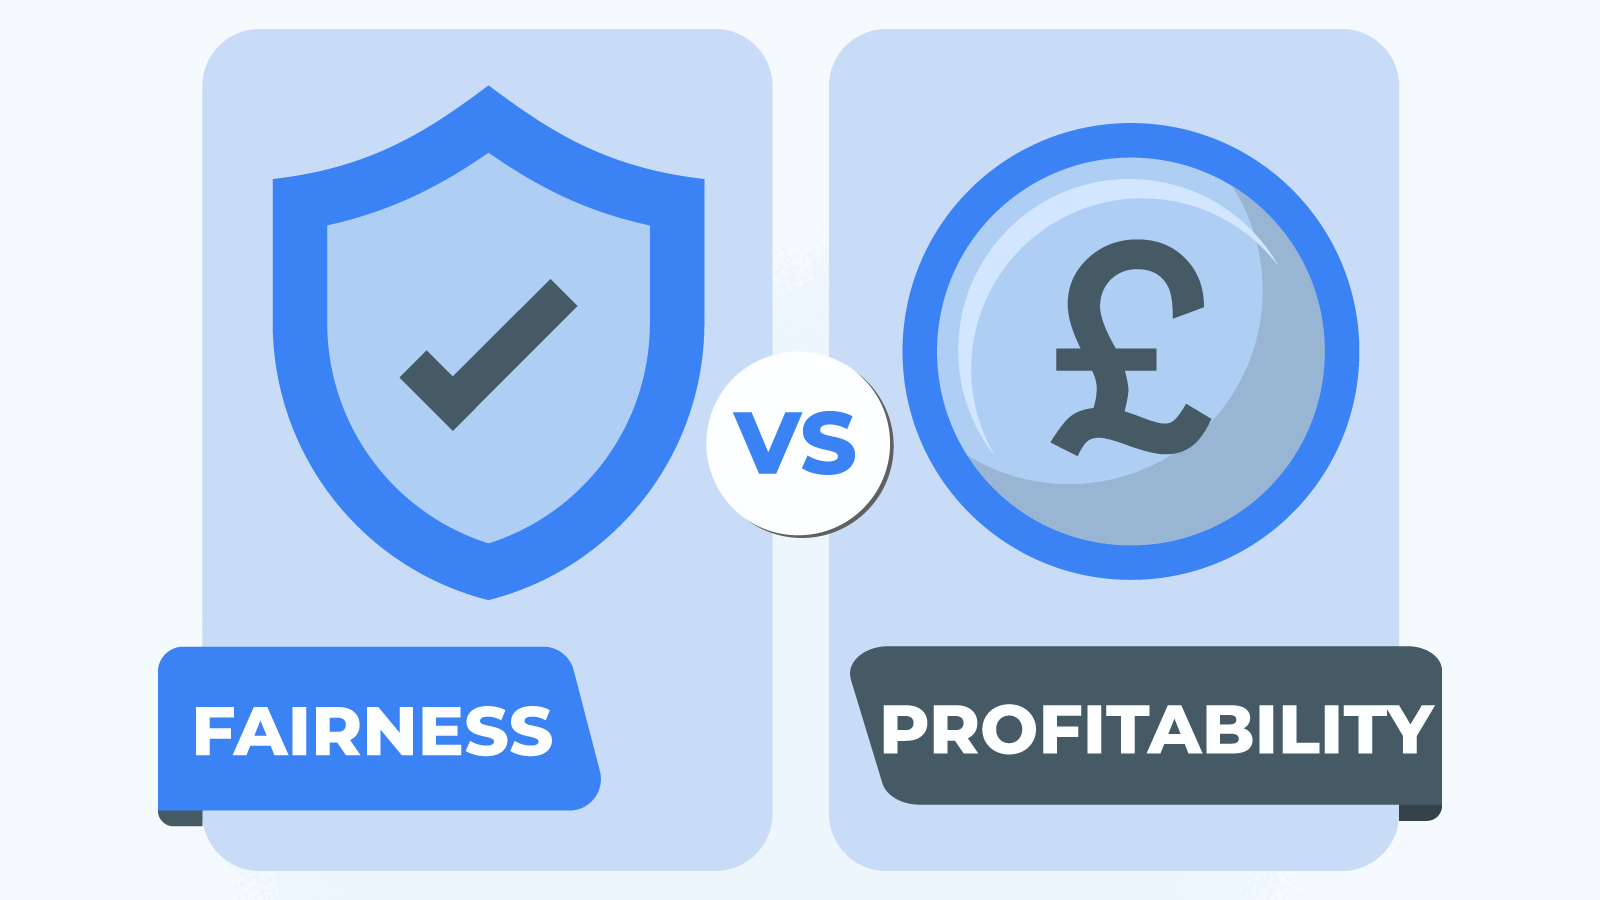 Fairness vs Profitability